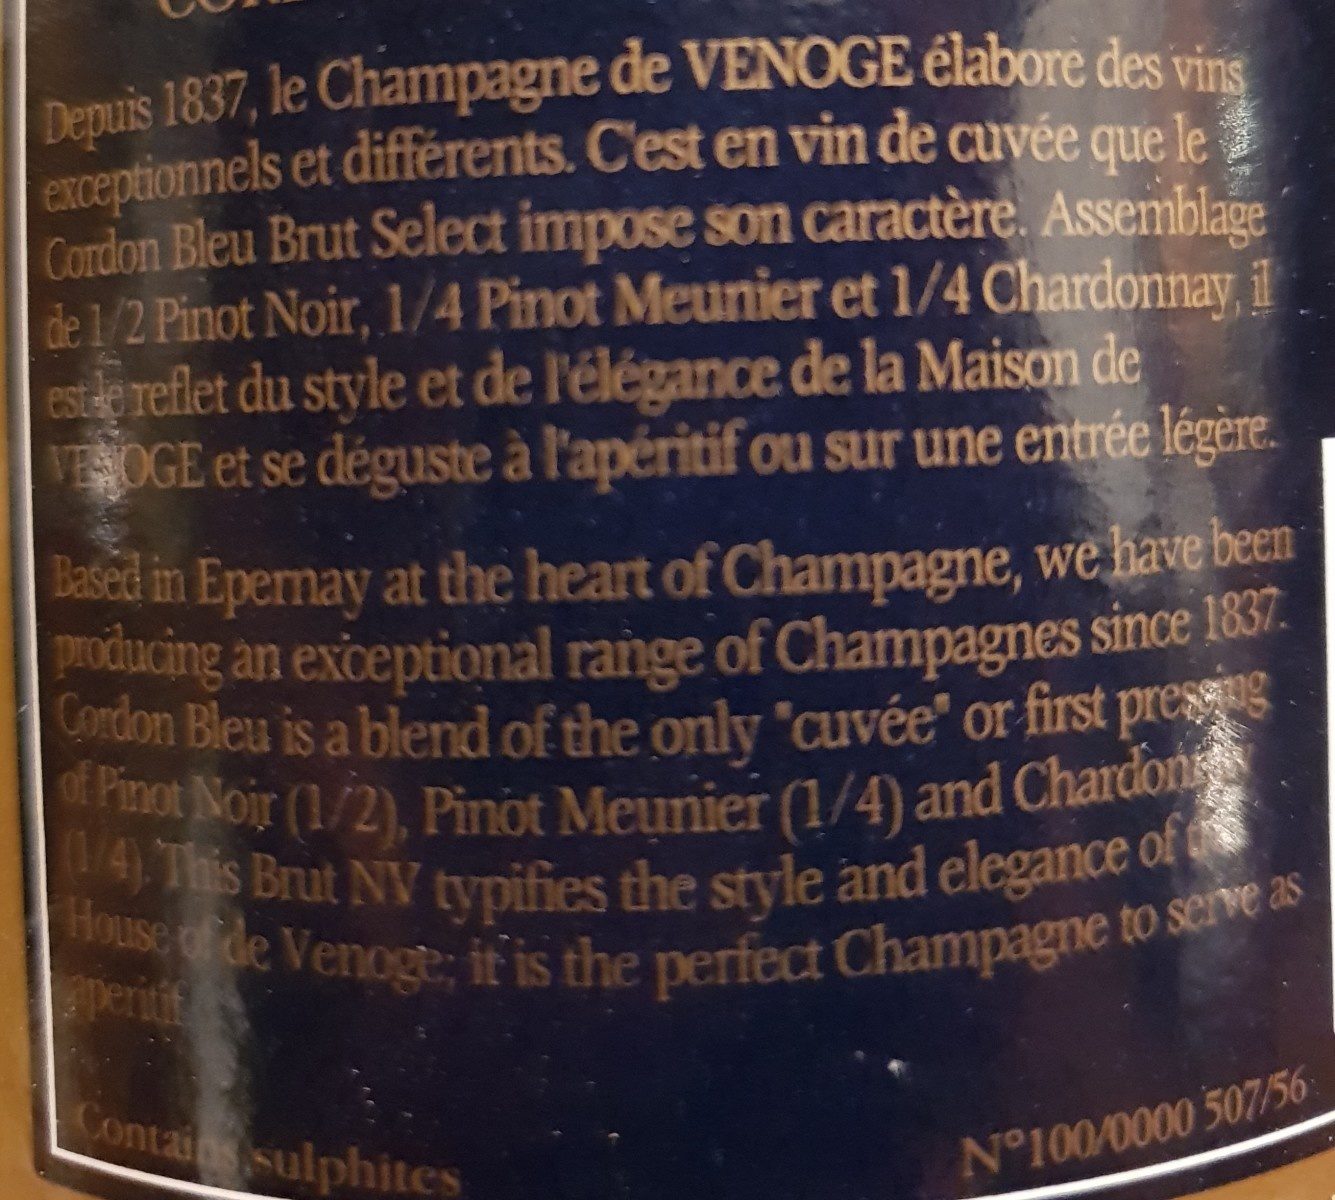 De Venoge - Cordon Bleu Brut Select - Ingredients - fr